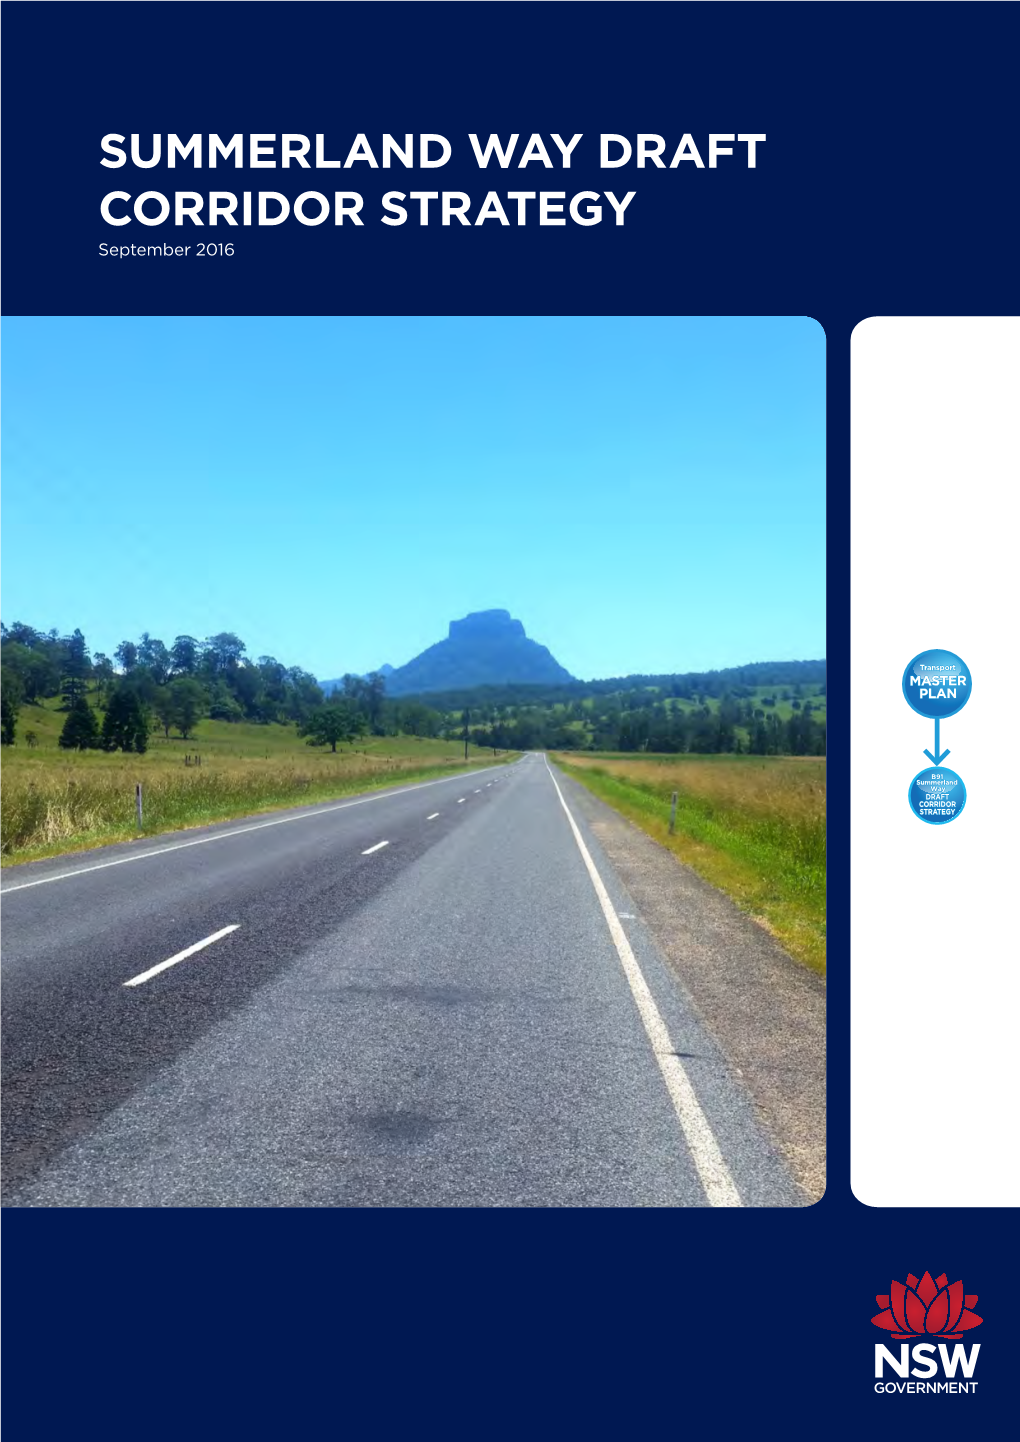 Summerland Way Draft Corridor Strategy September 2016